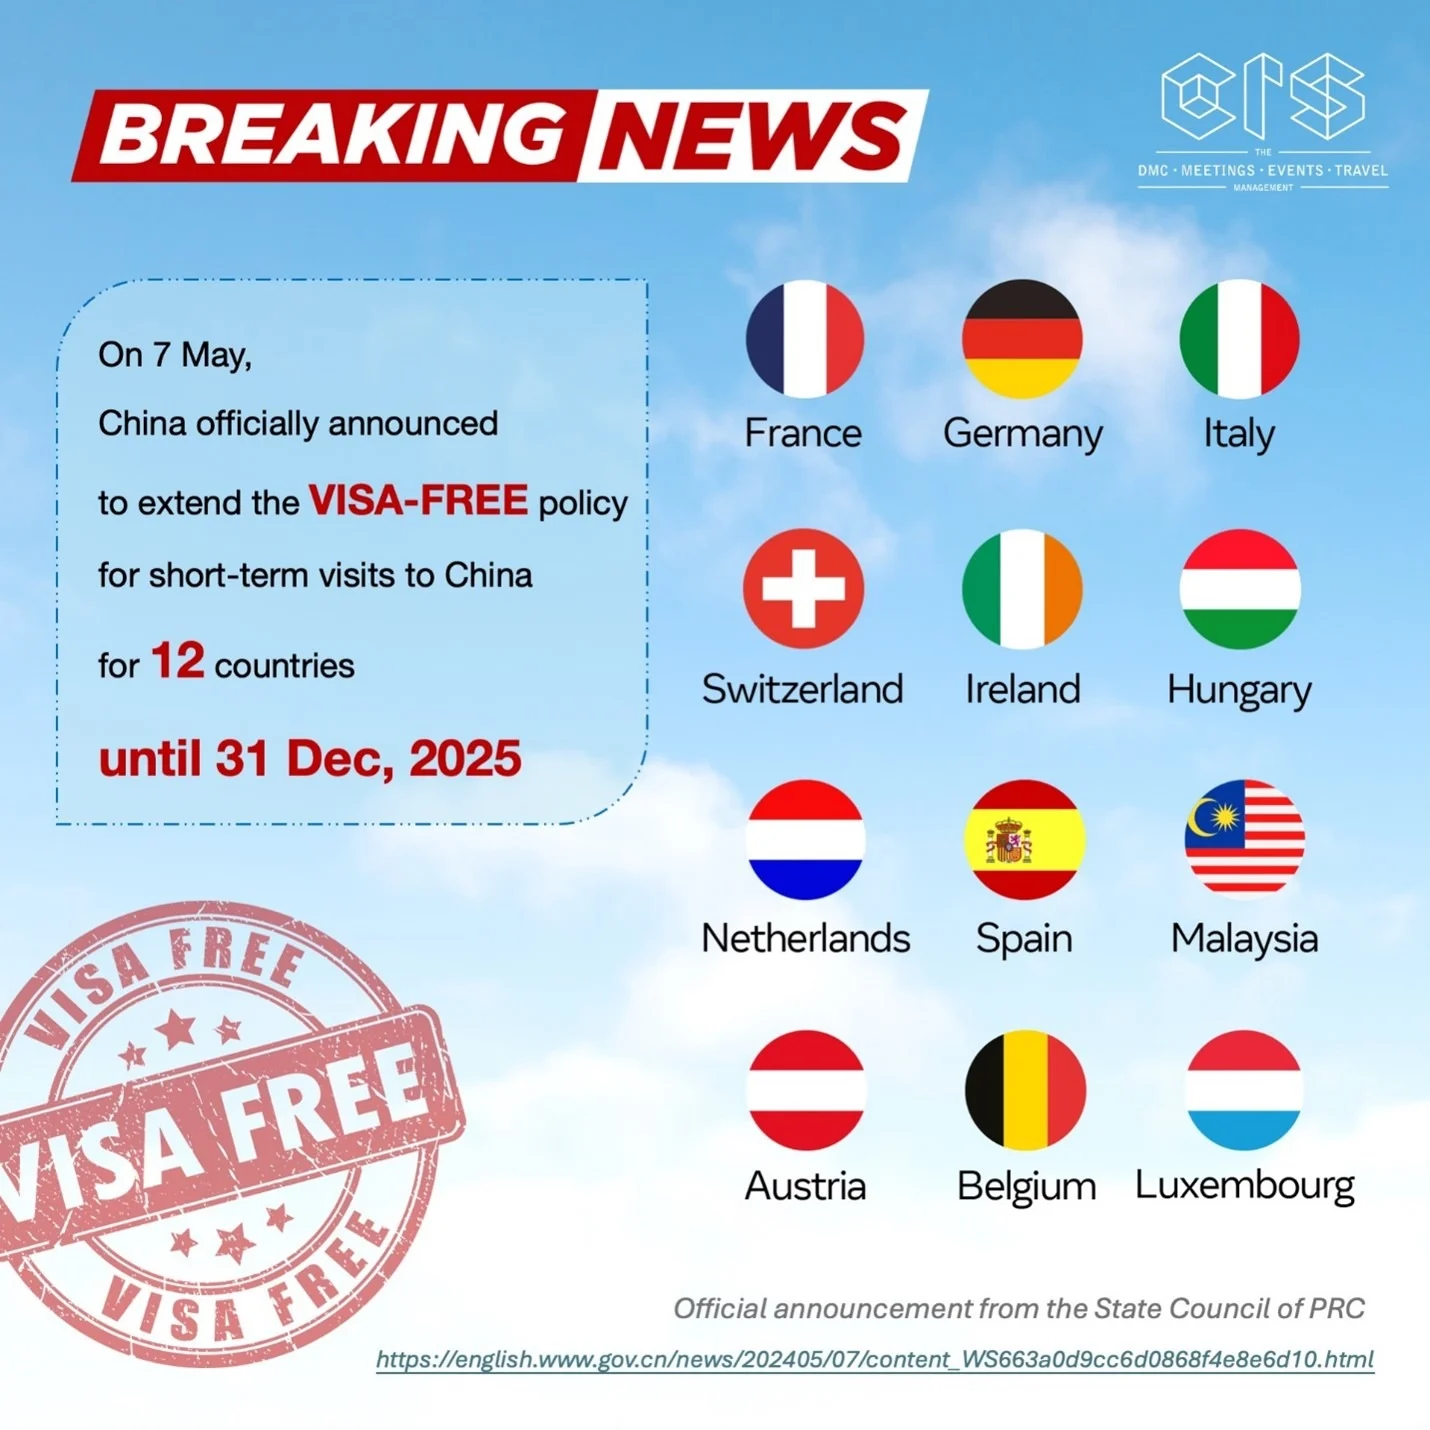 Visa info